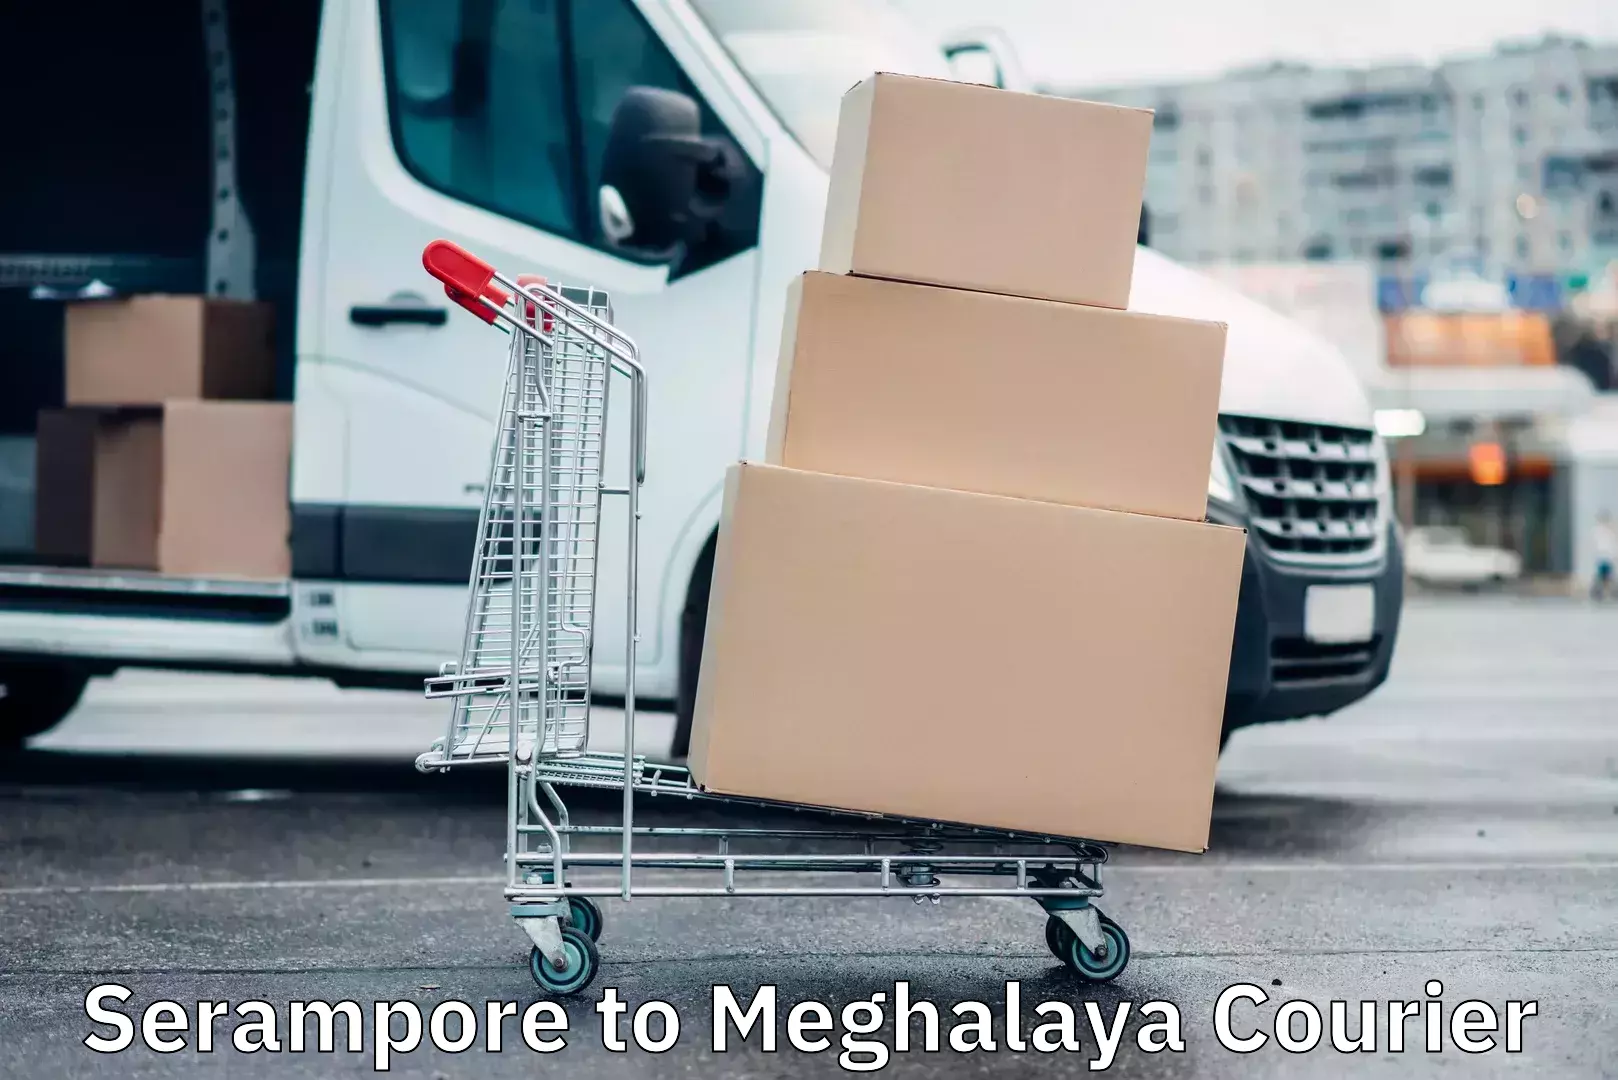 Efficient order fulfillment Serampore to Meghalaya